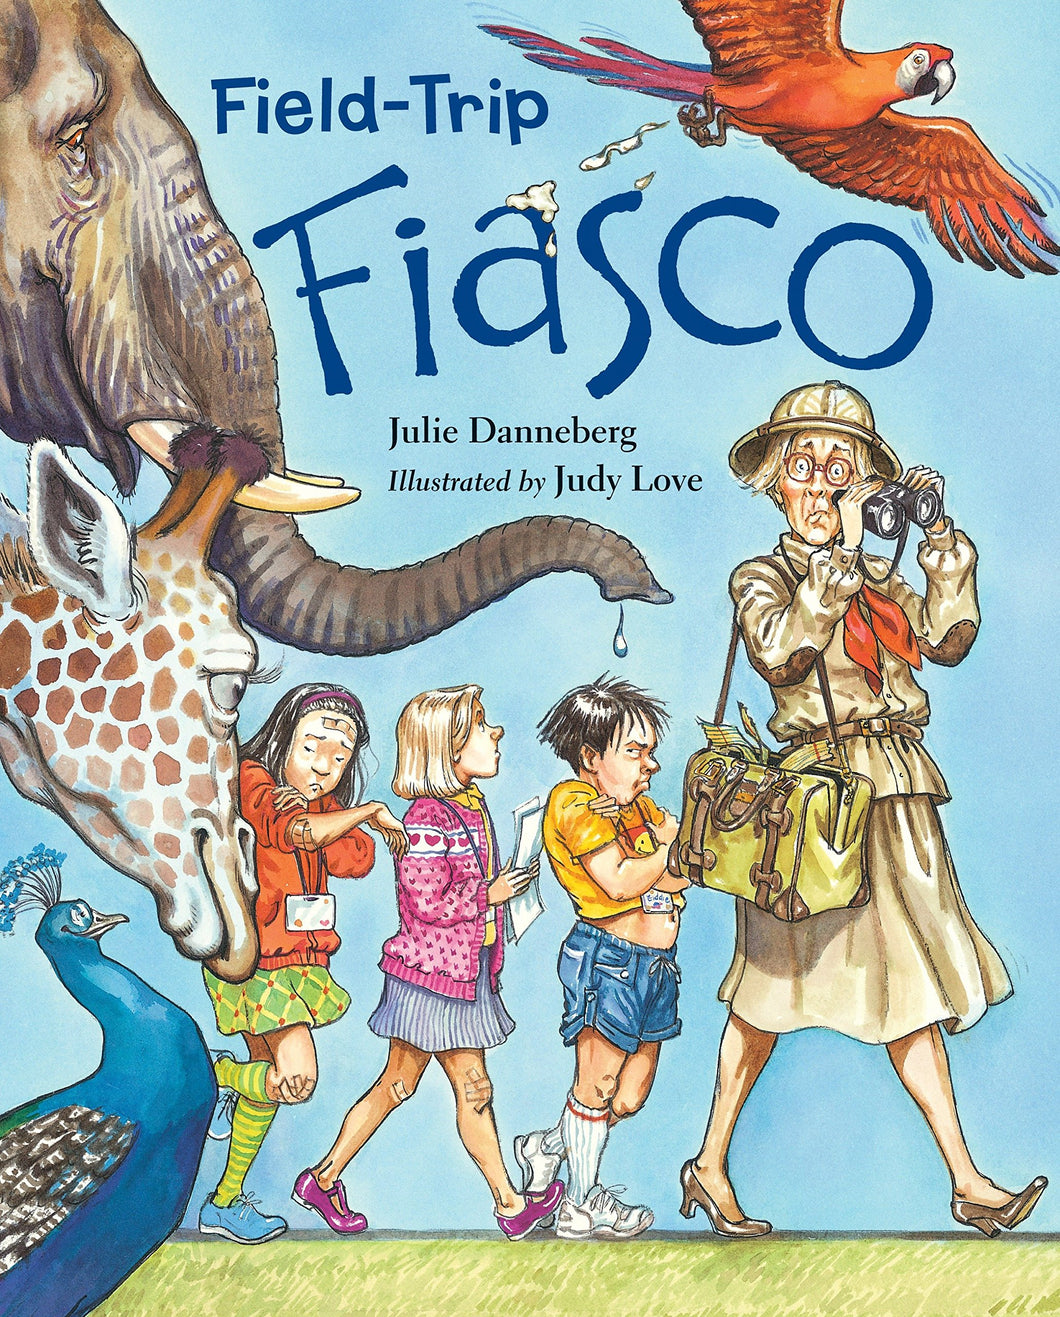 Field-Trip Fiasco (Mrs. Hartwell's Classroom Adventures Book 5)